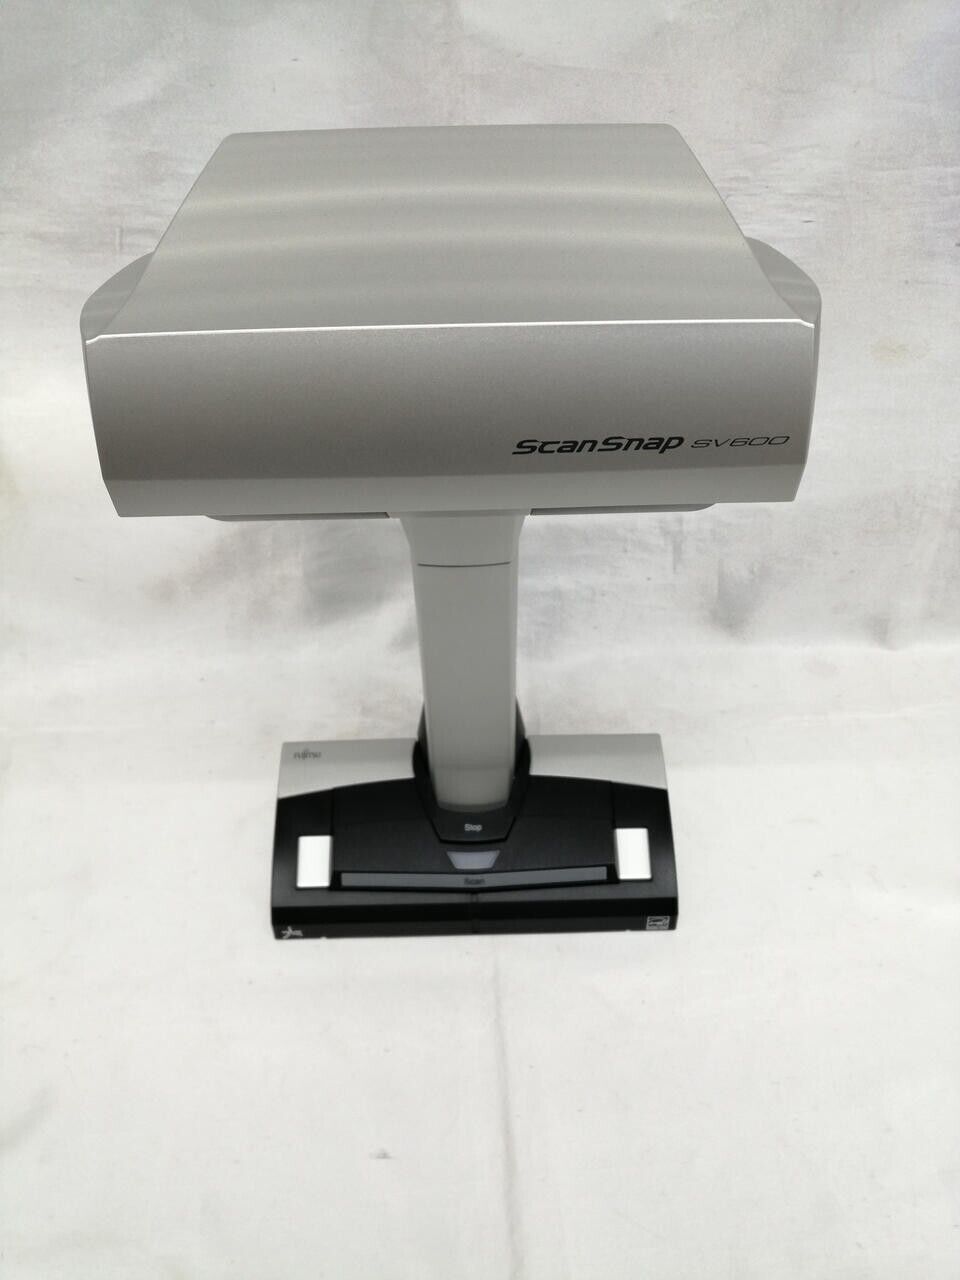 FUJITSU Scanner Model Number: SCANSNAP SV600 Peripheral Equipment RARE Popular